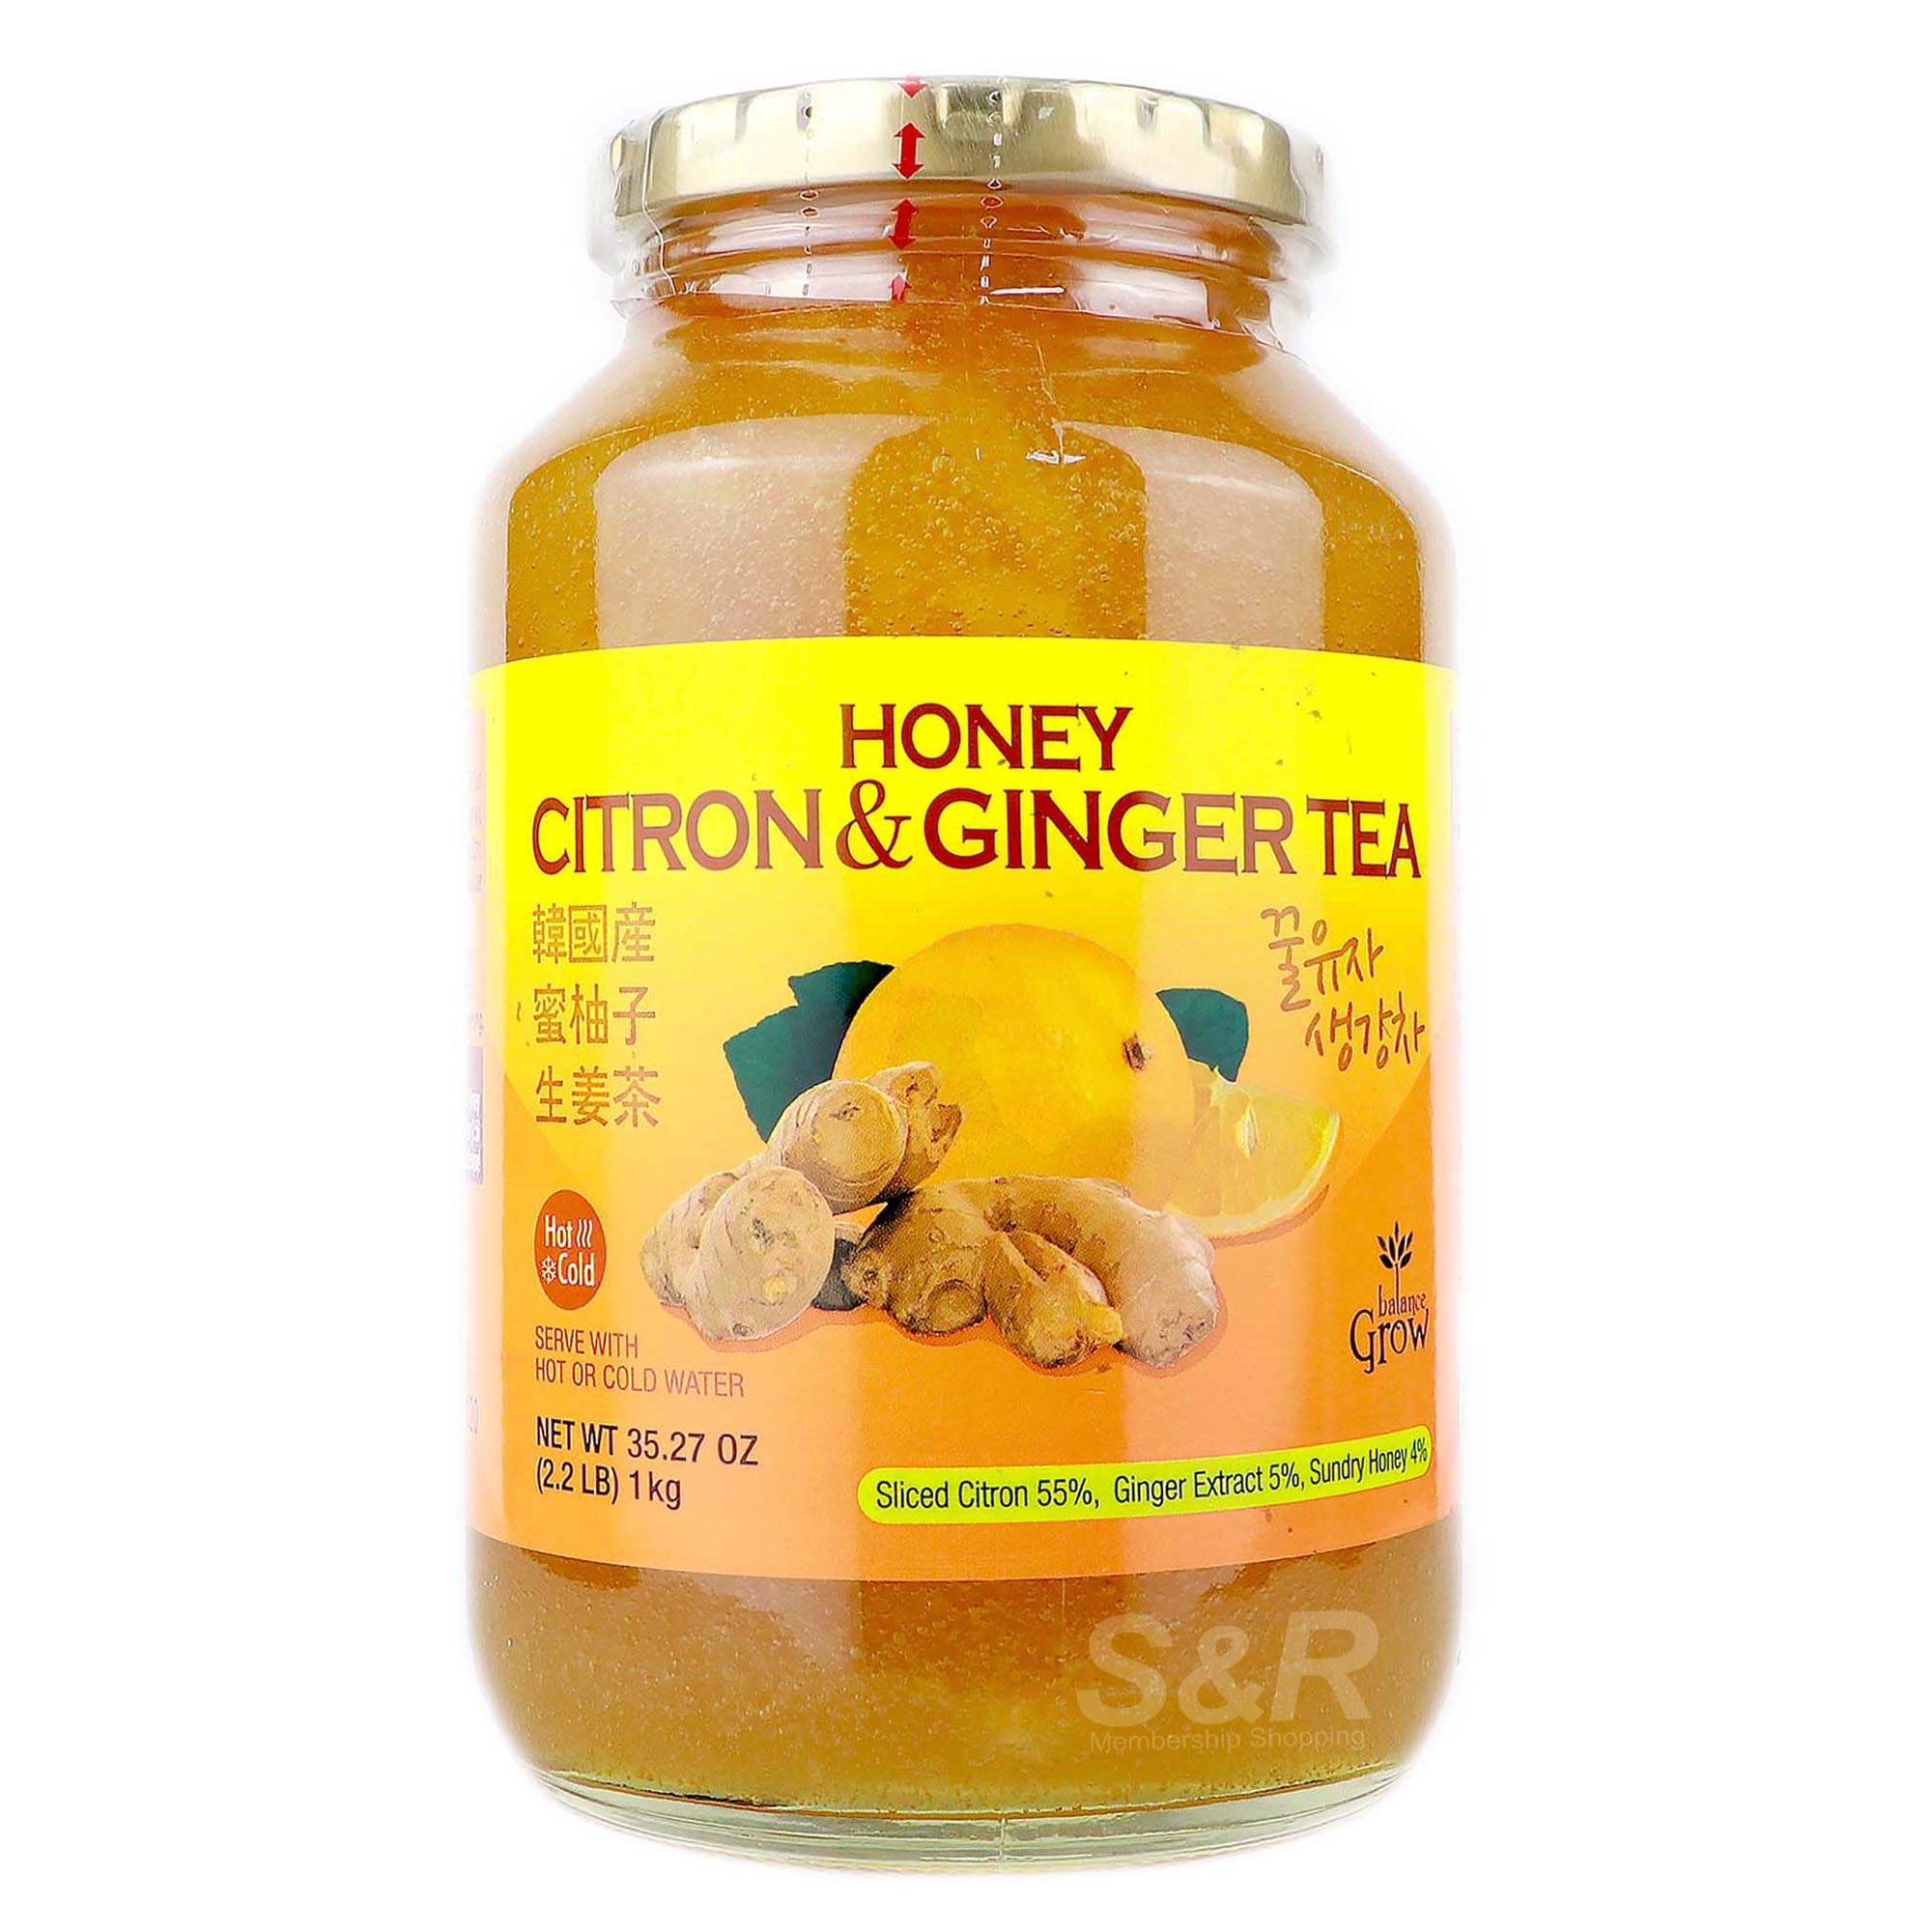 Balance Grow Honey Citron & Ginger Tea 1kg